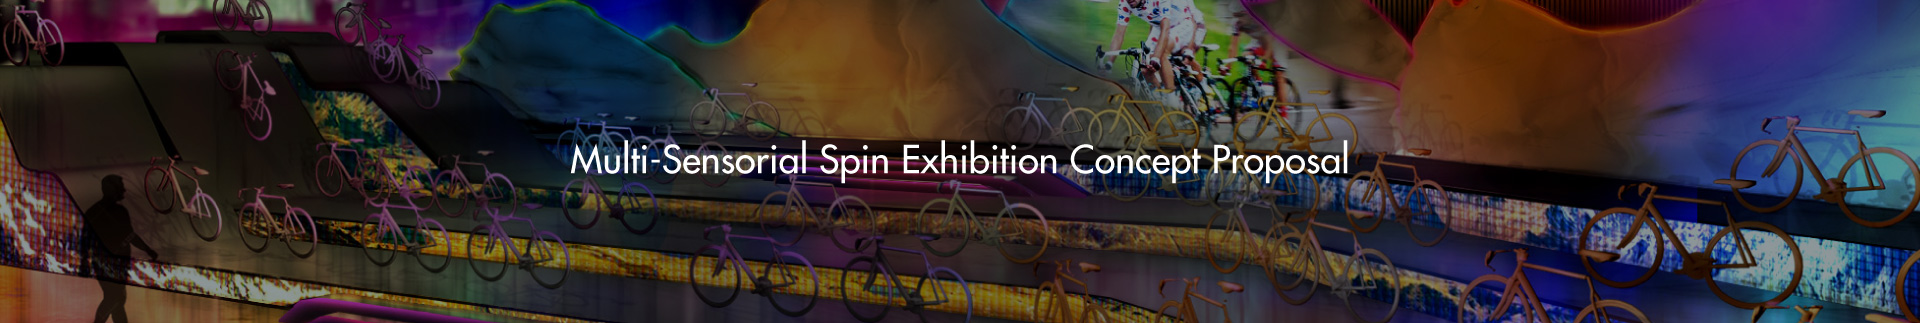 Multi-Sensorial Spin Exhibition Concept Proposal